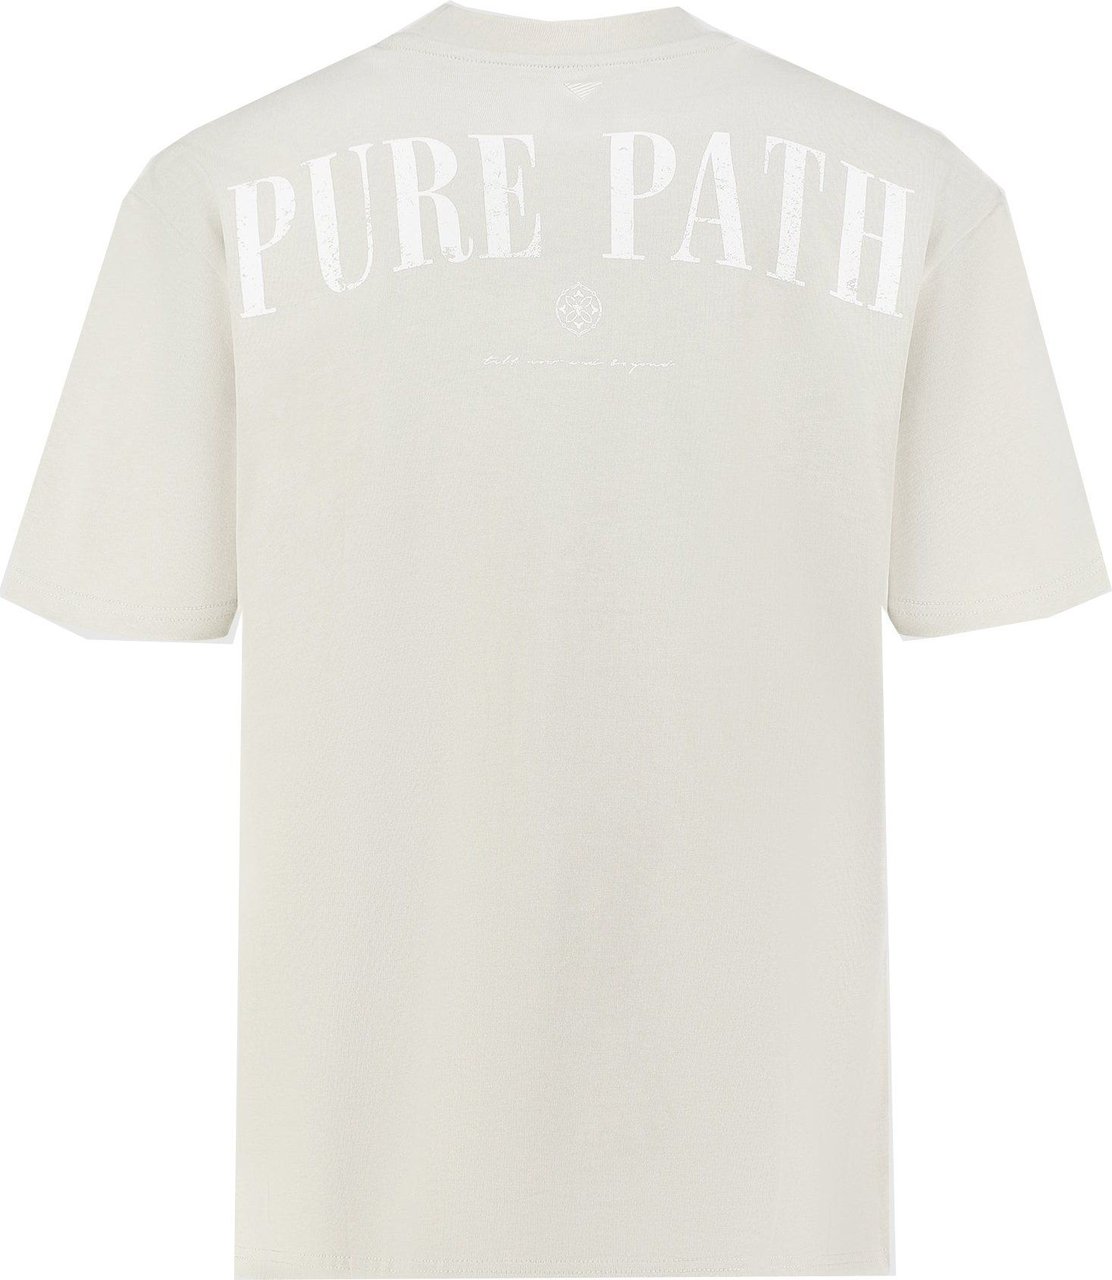 Pure Path Vintage logo tee Beige